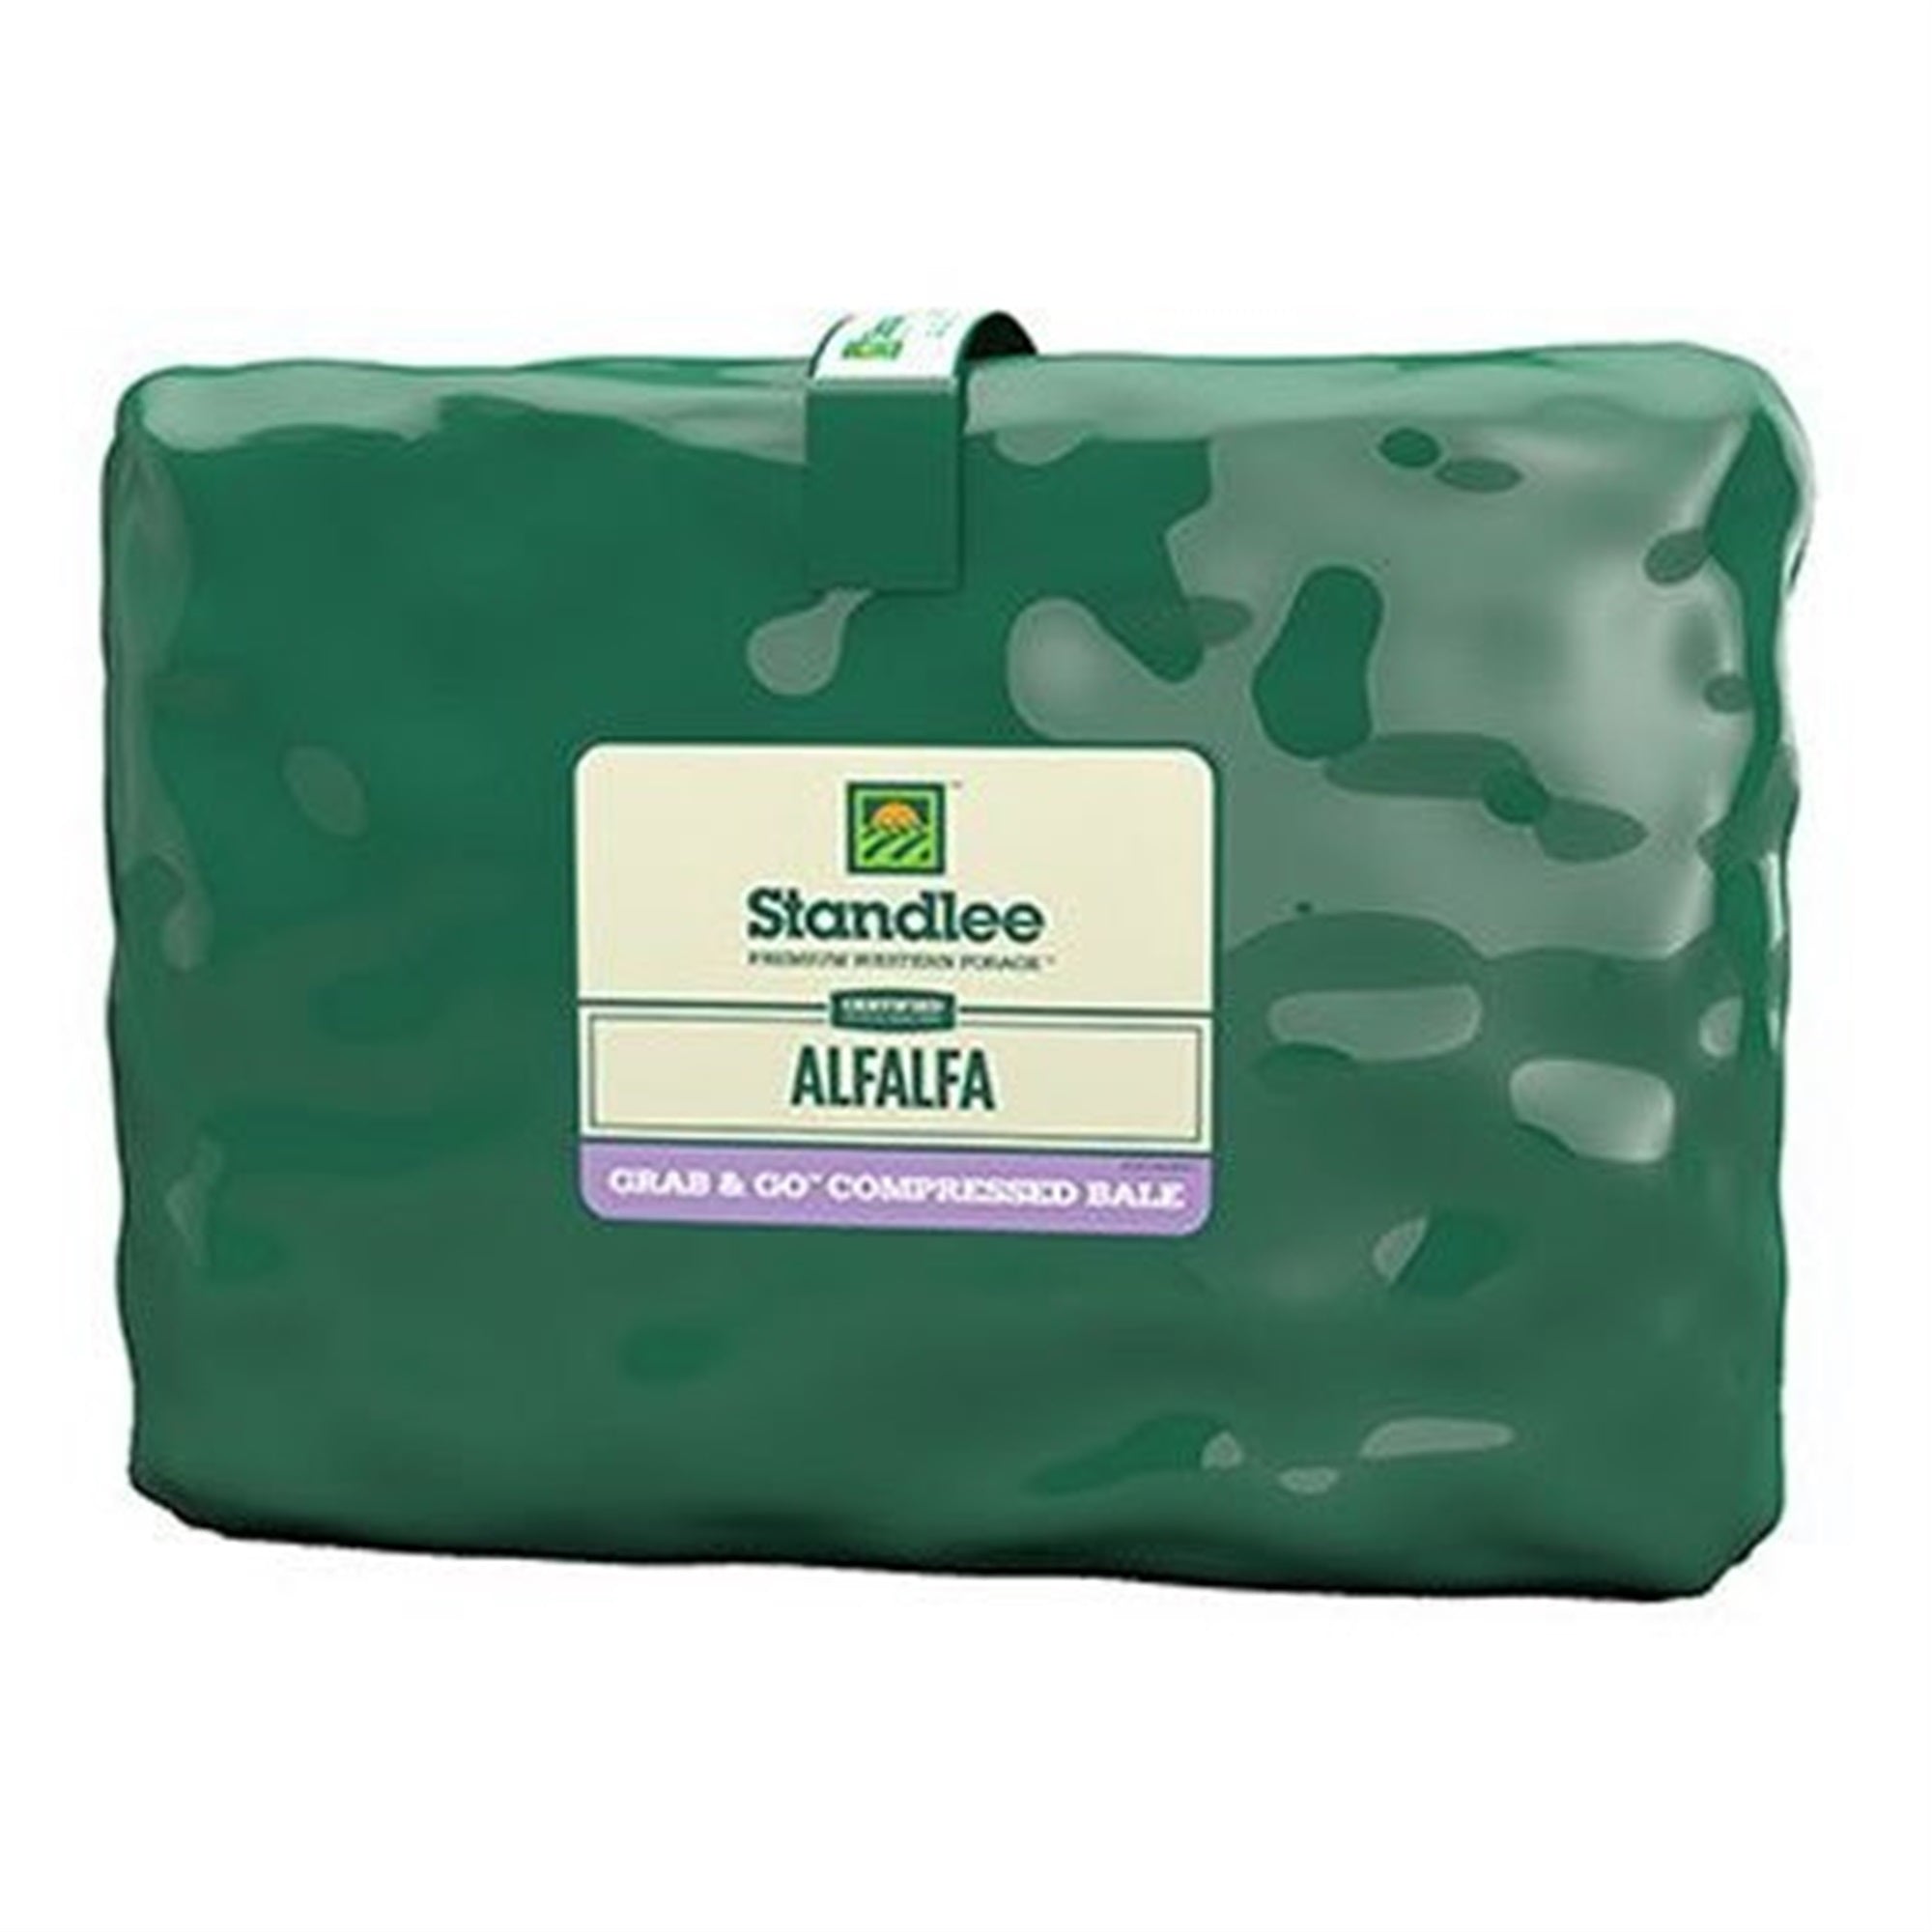 Standlee Premium Organic Alfalfa Grab & Go Compressed Bale for Livestock, 50 LB